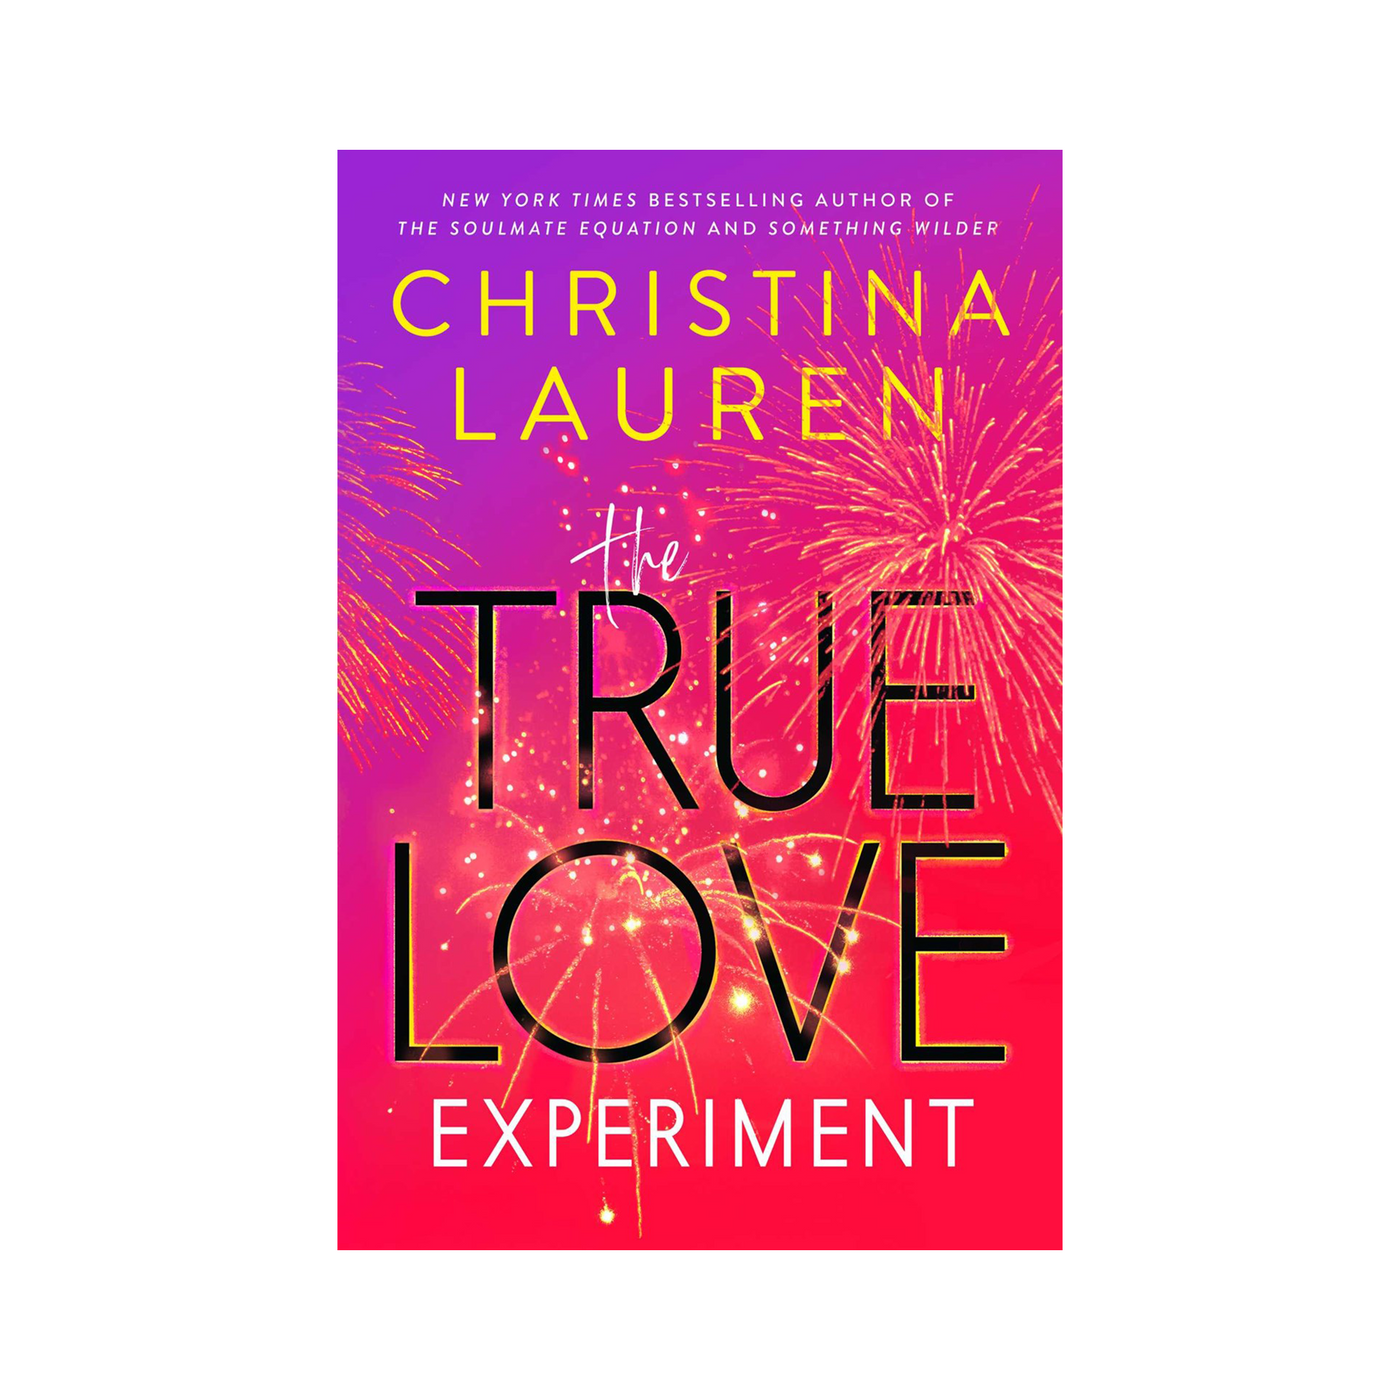  The True Love Experiment: 9781982173432: Lauren, Christina:  Books